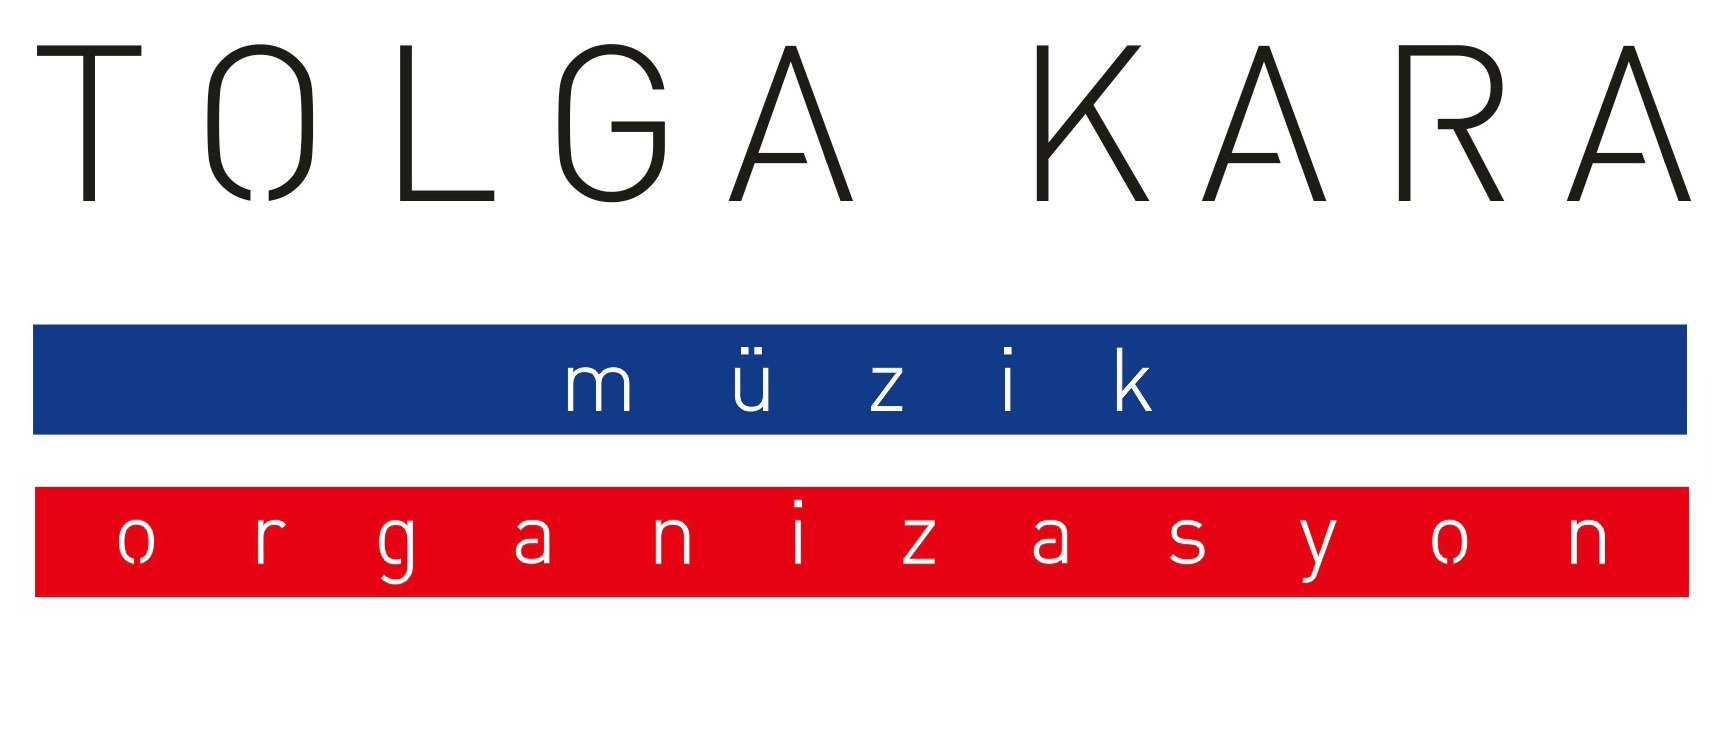 2017 Balova Kna Organizasyonlarmz